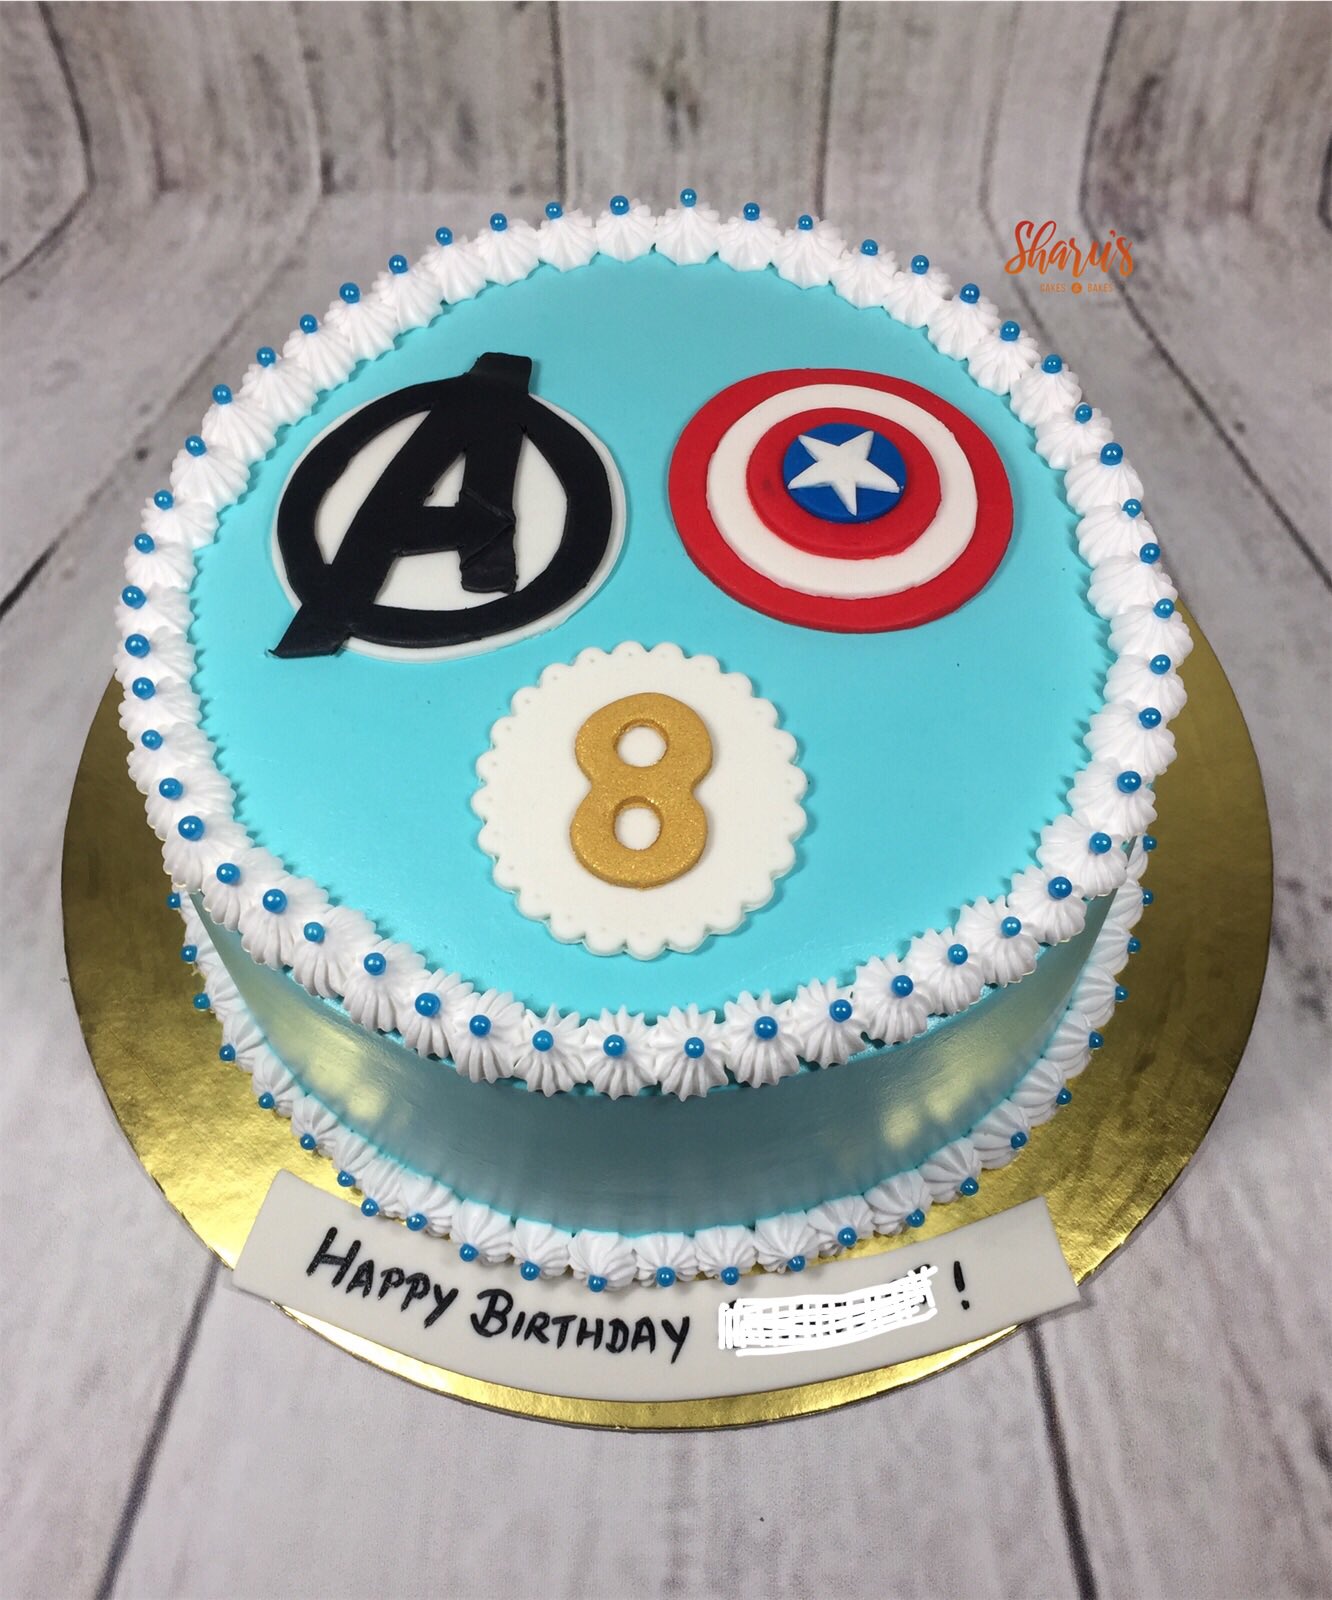 League of Avengers Cake | Customised Cake in Singapore | Baker's Brew